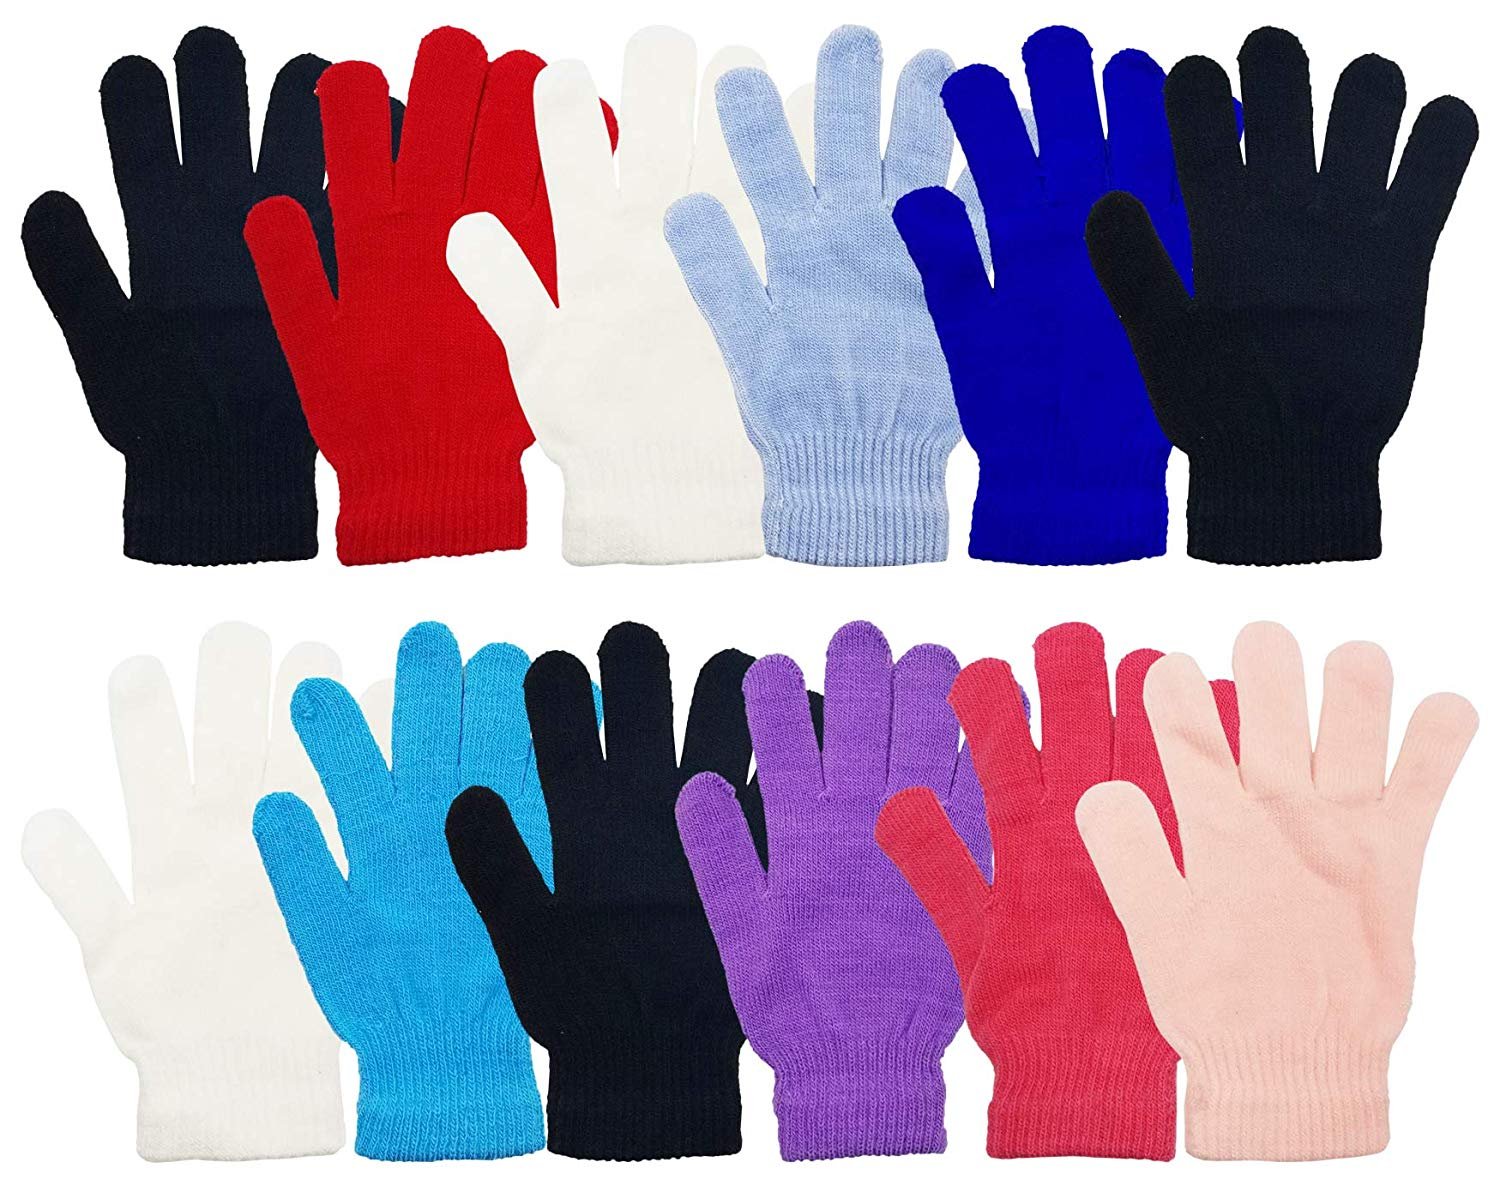 Kids Warm Magic Gloves,14 Pairs Boys Girls Winter Stretchy Knit Gloves 